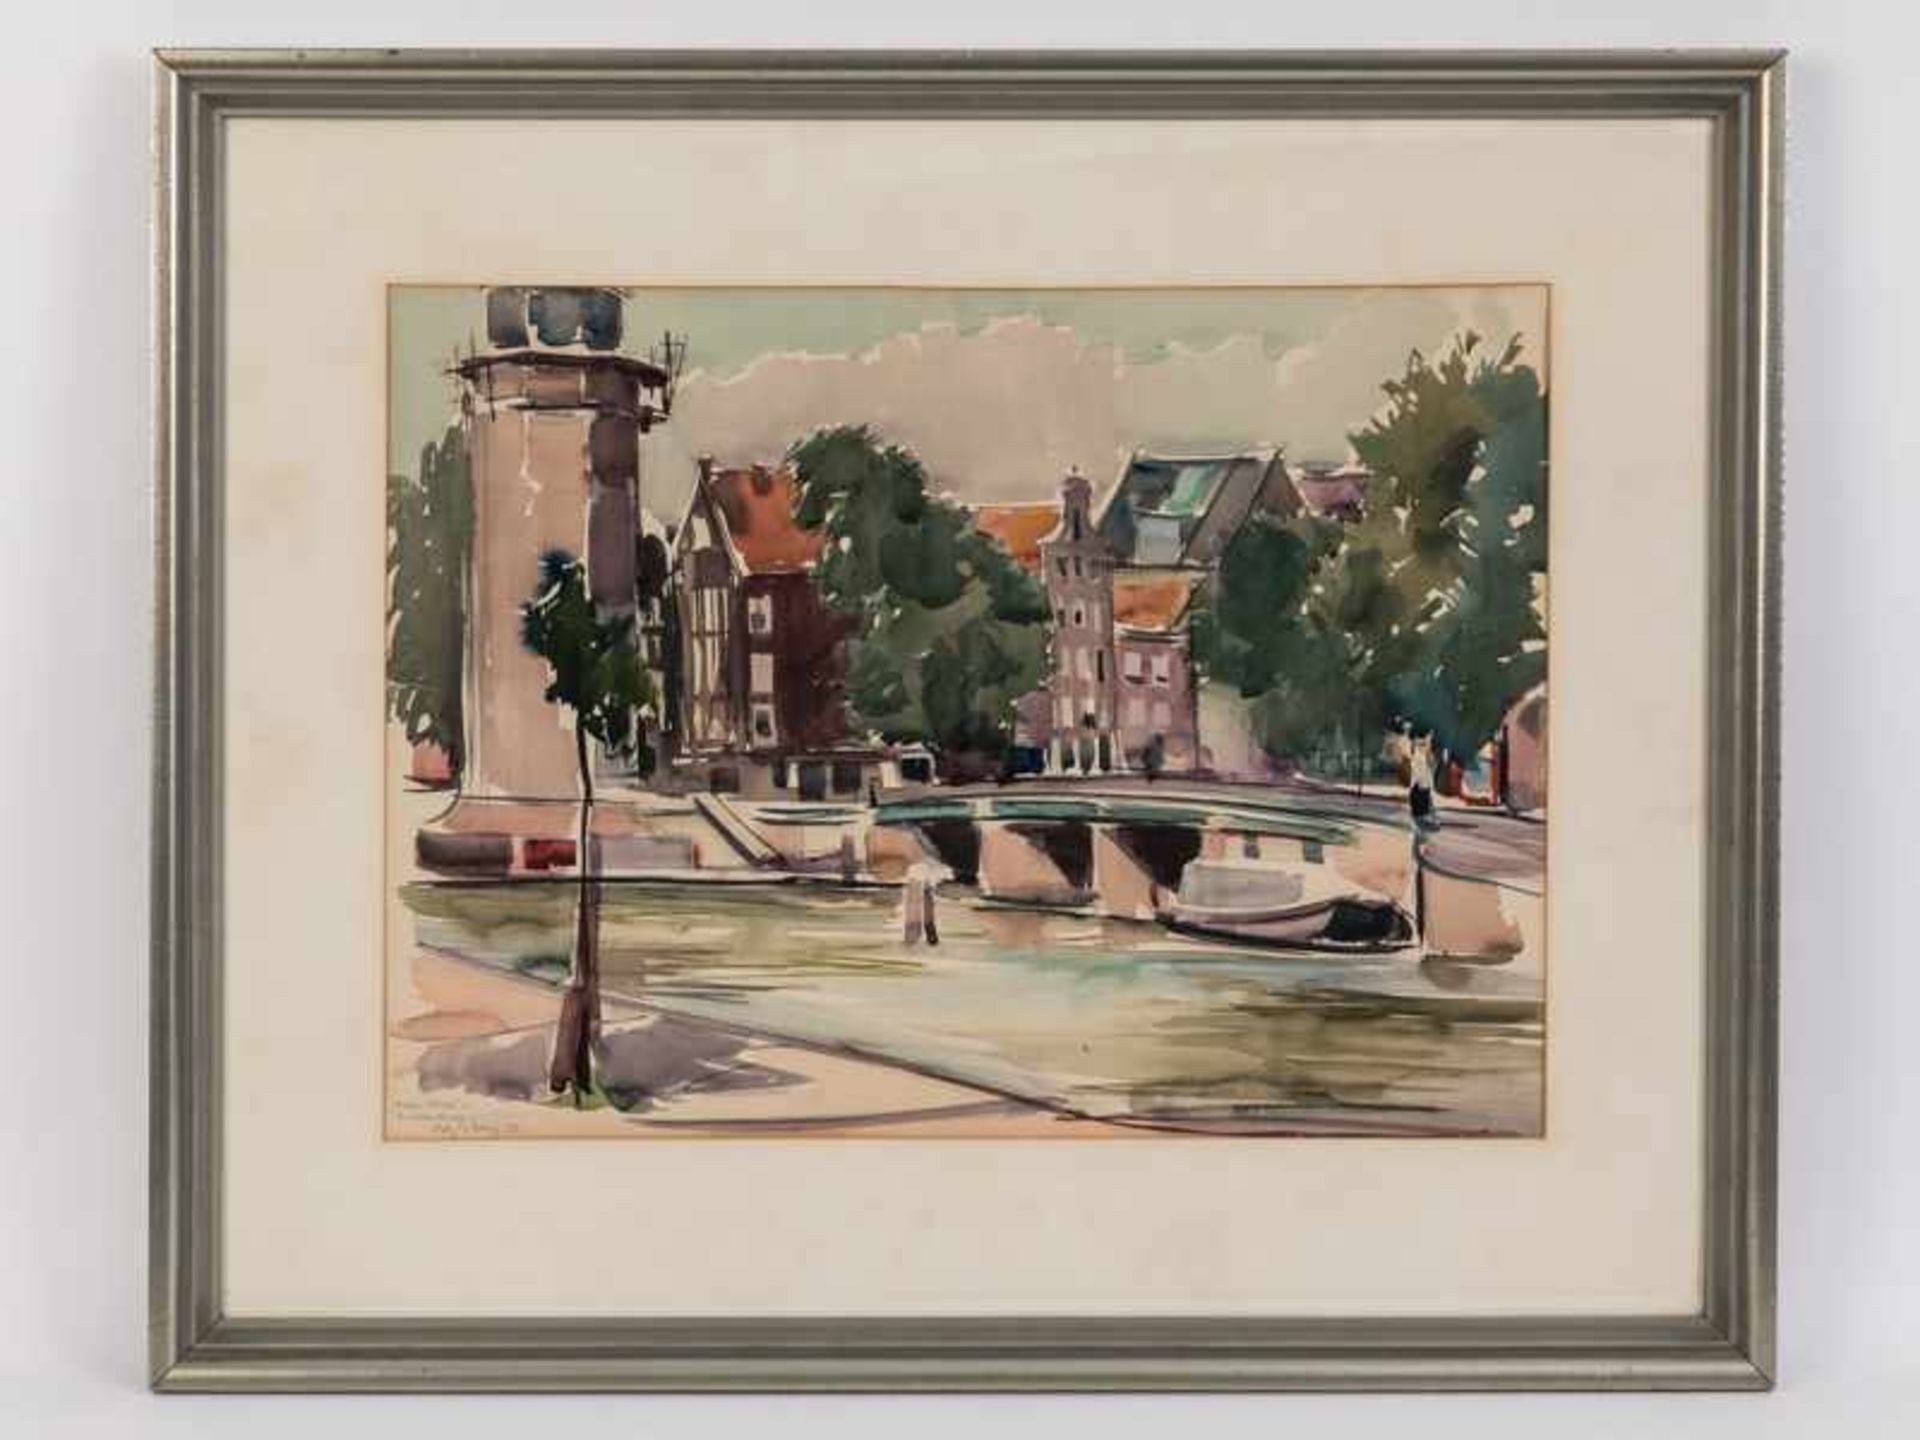 Böhlig, Rolf (1904 - 1979). Aquarell; " 'Oude Waal' in Amsterdam", 1952; unten links in Blei